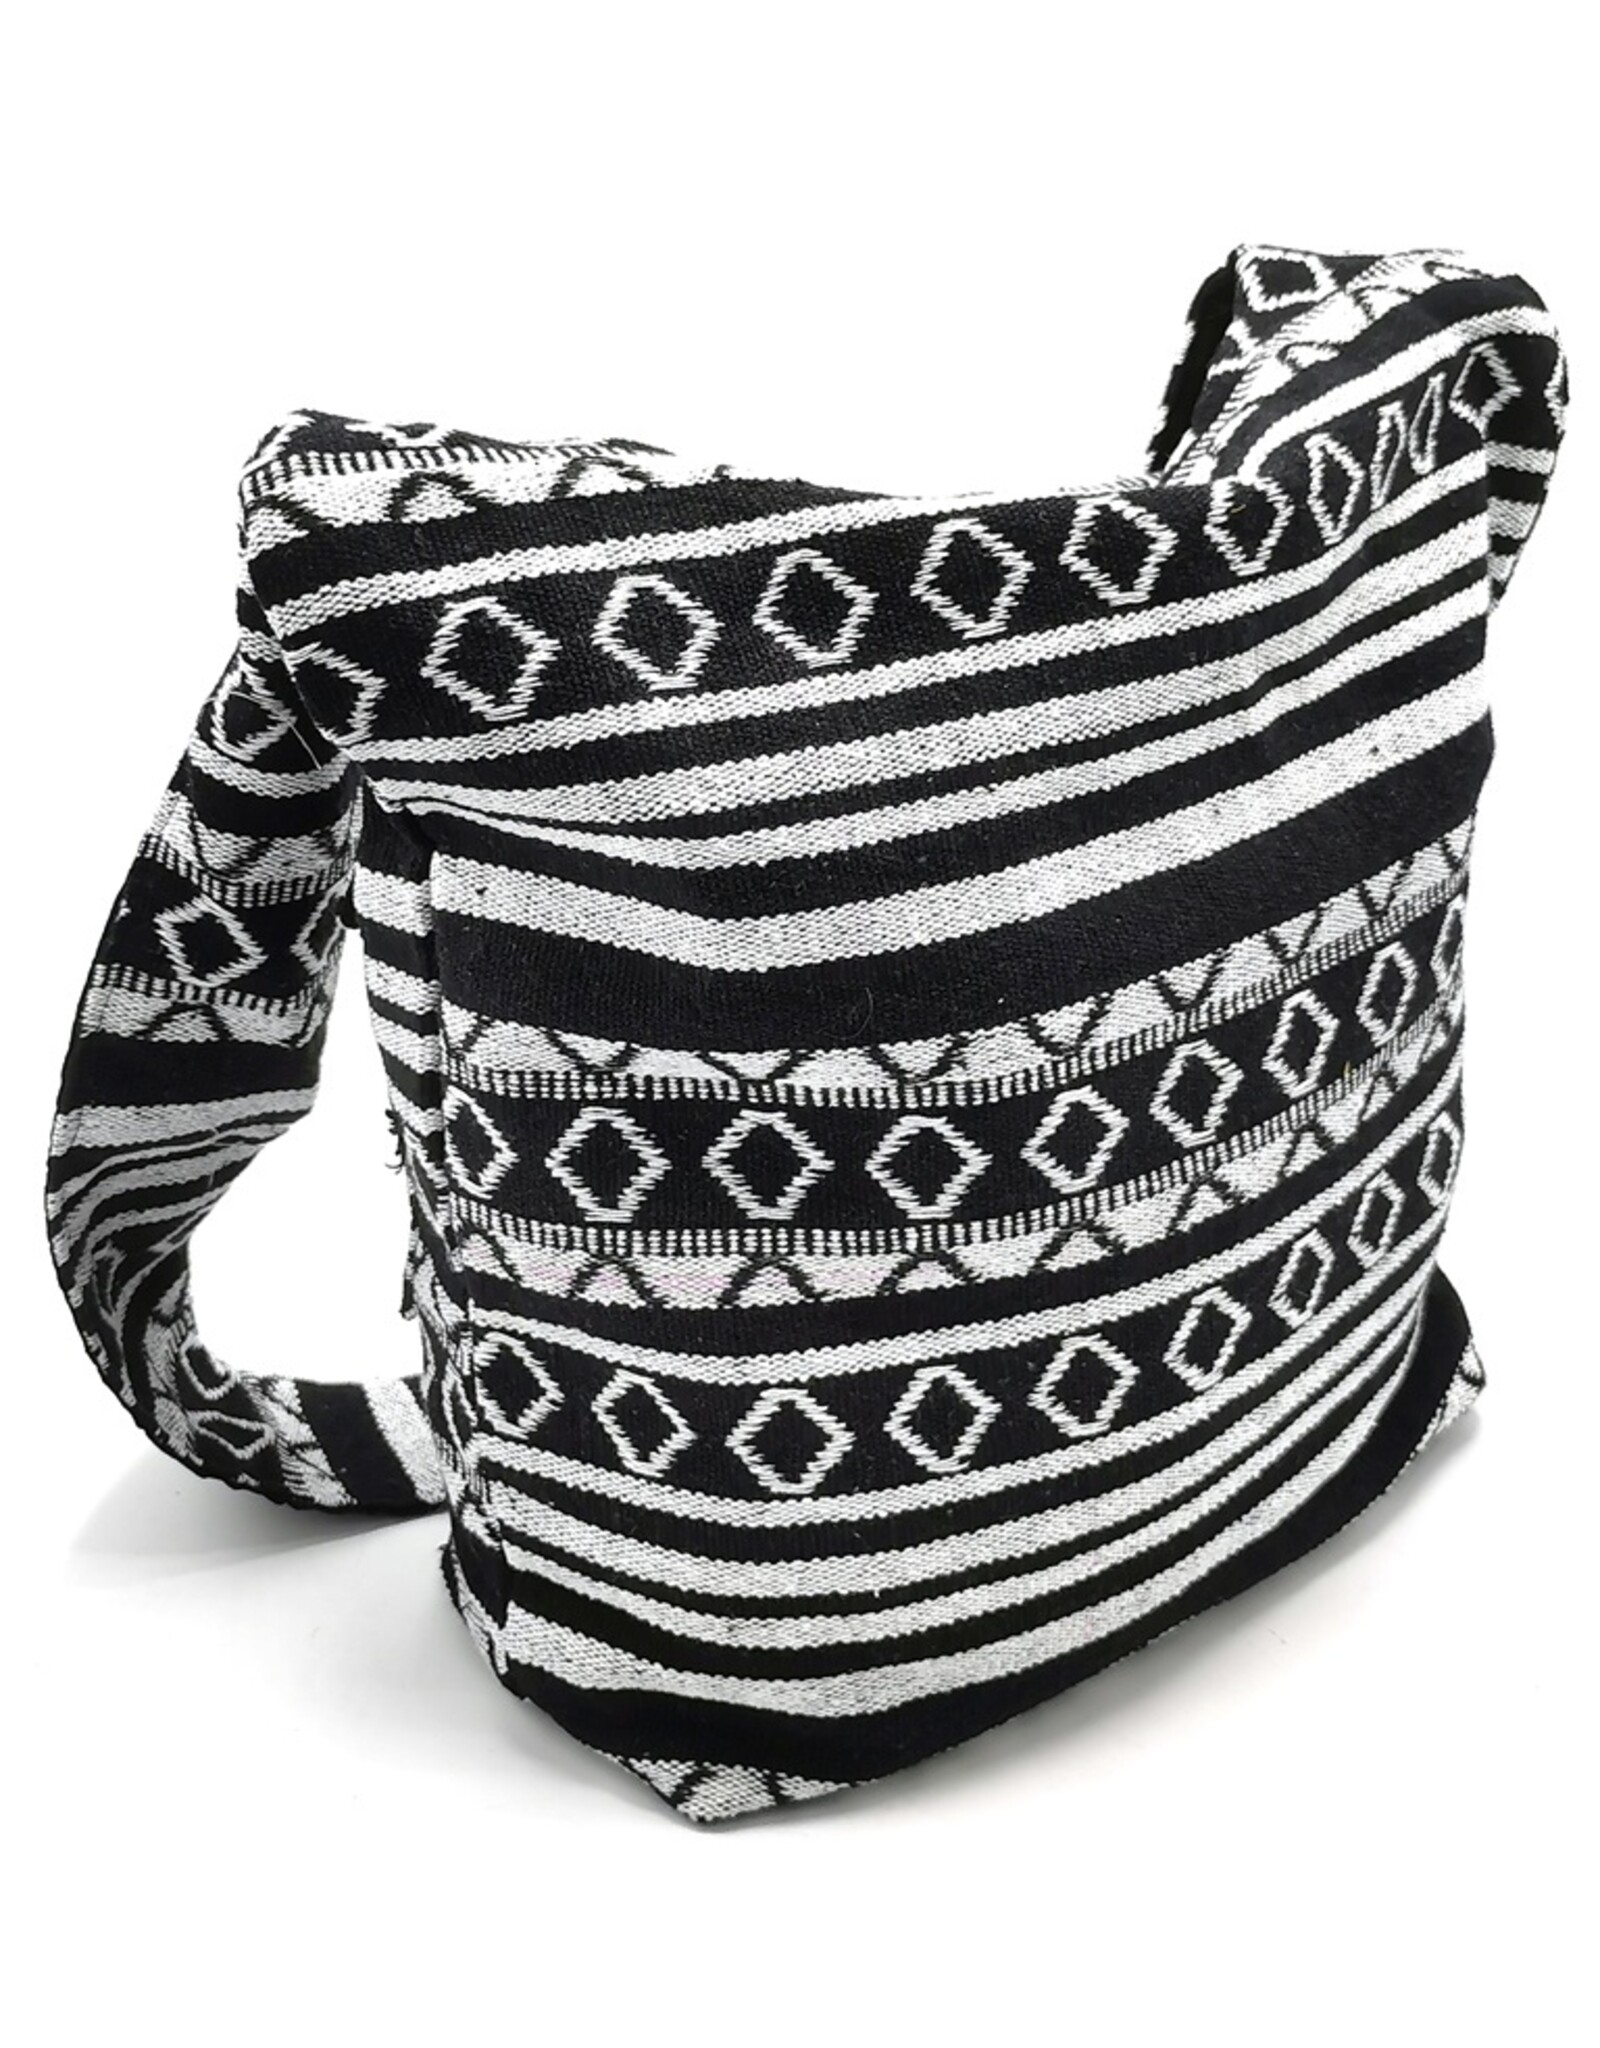 Trukado Fashion bags - Hobo bag Woven Fabric with Ethnic Pattern